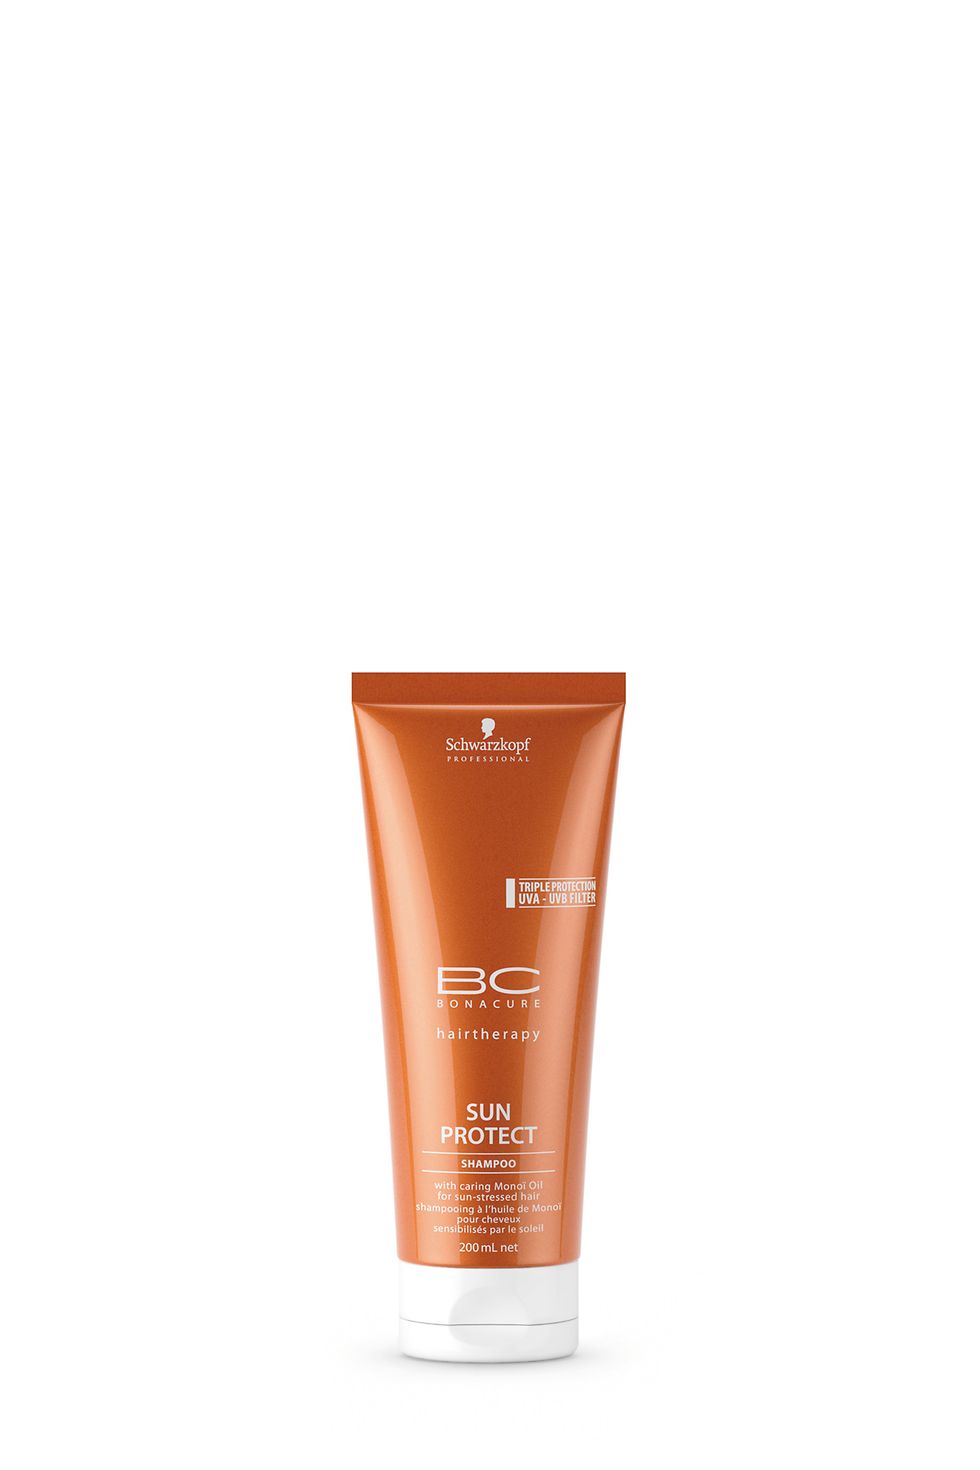 2014-06-24-BC Sun Protect Shampoo 2.jpg